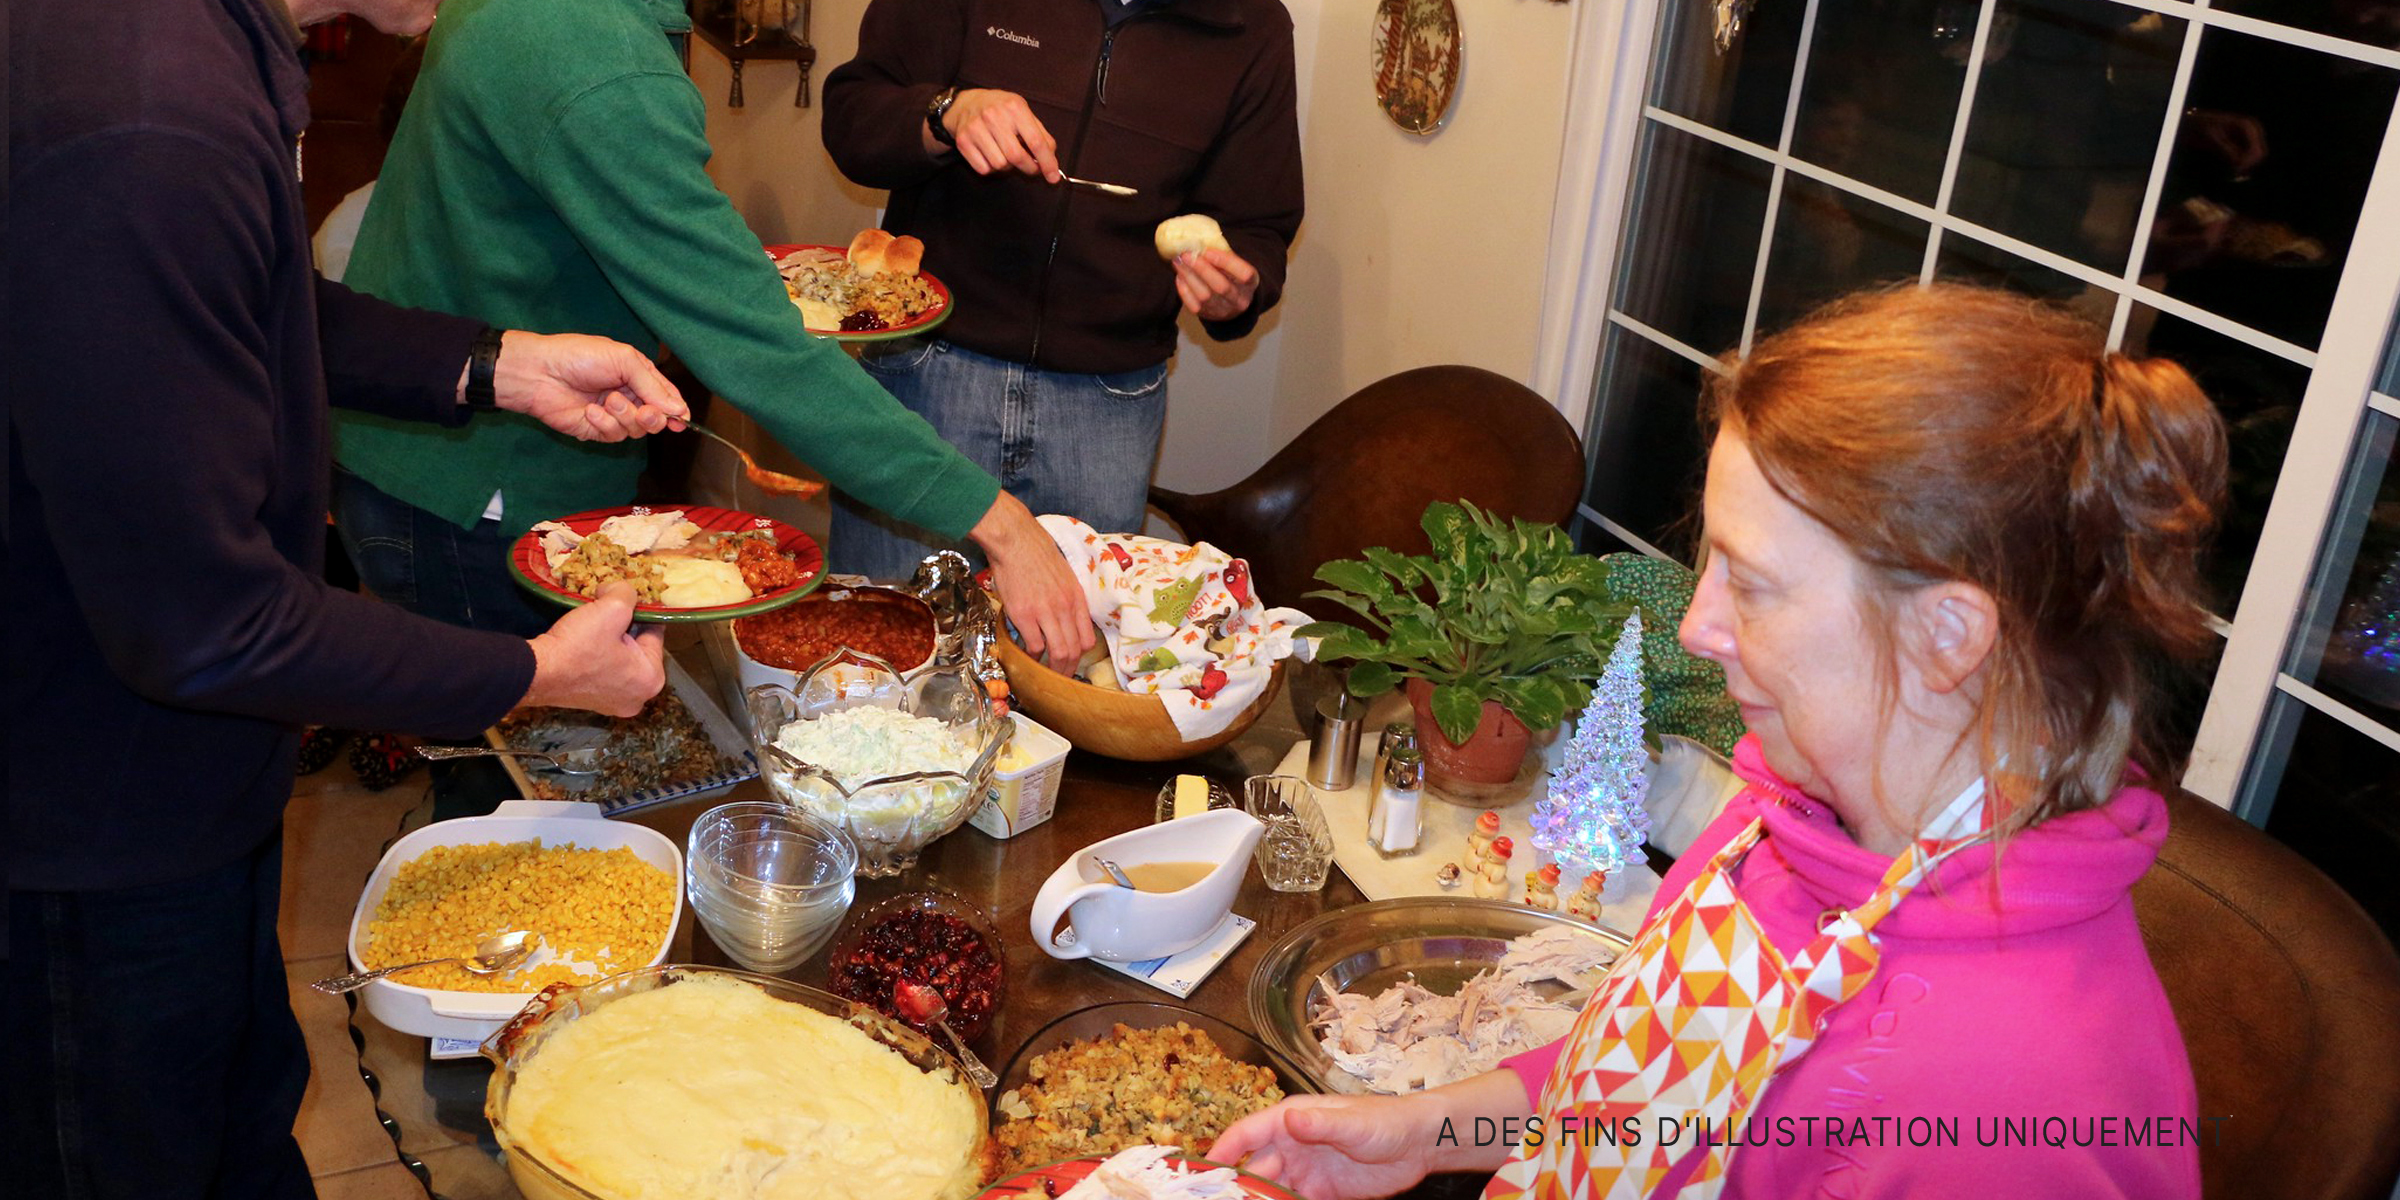 Des gens en train de dîner | Source : flickr.com/oakleyoriginals/CC BY 2.0